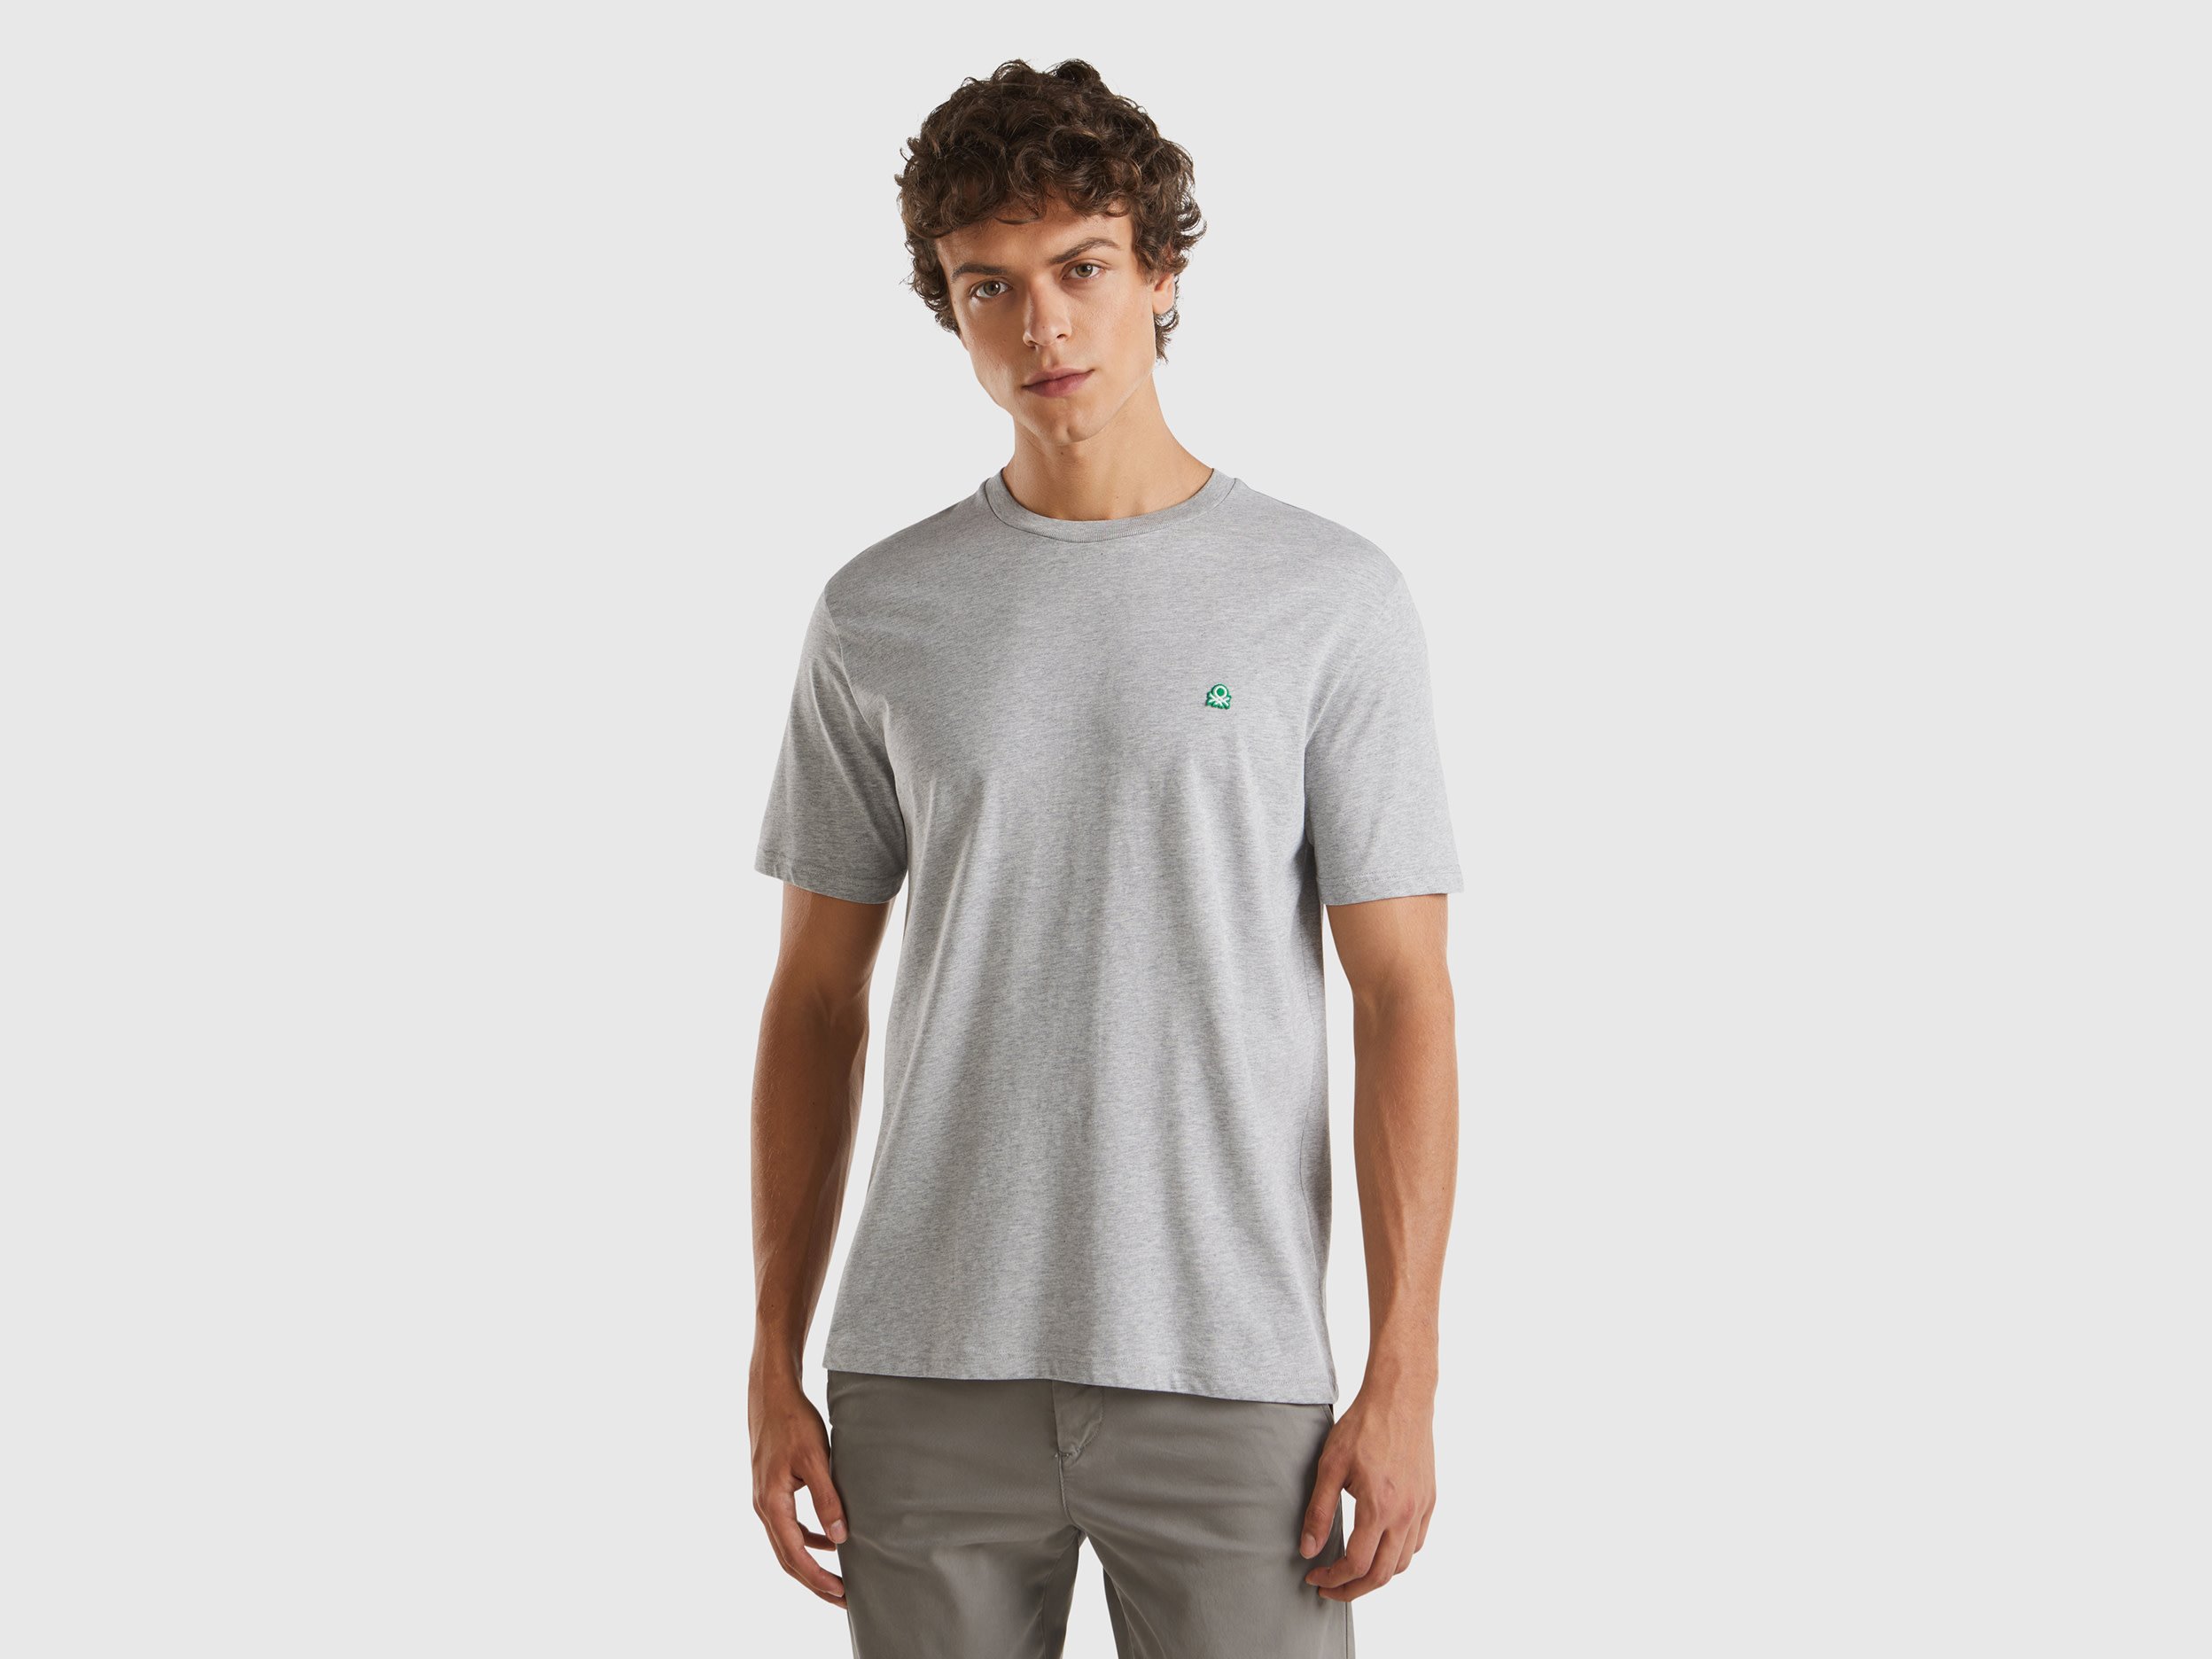 Image of Benetton, 100% Organic Cotton Basic T-shirt, size S, Light Gray, Men